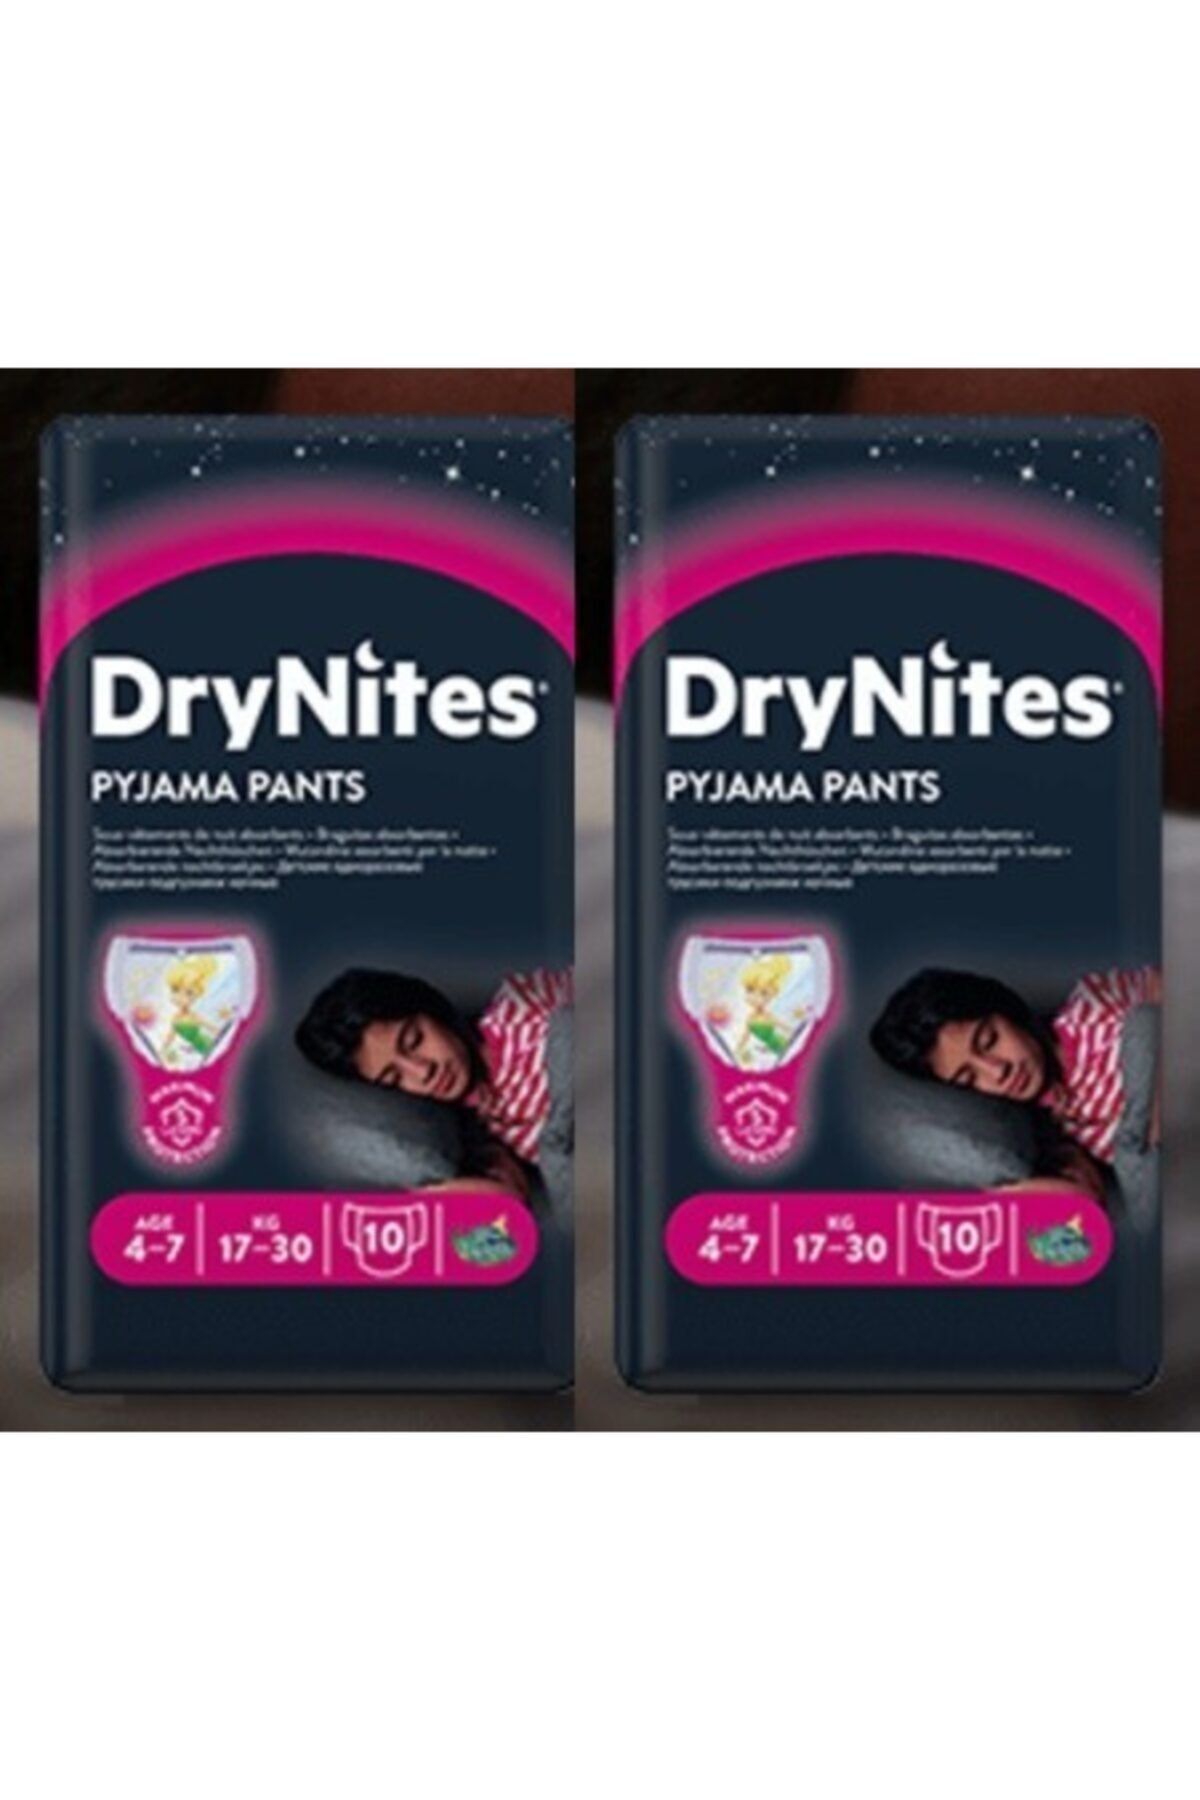 DryNites Kız Gece Emici Külodu 4-7 Yaş 17-30 kg 10'lu 2 Paket